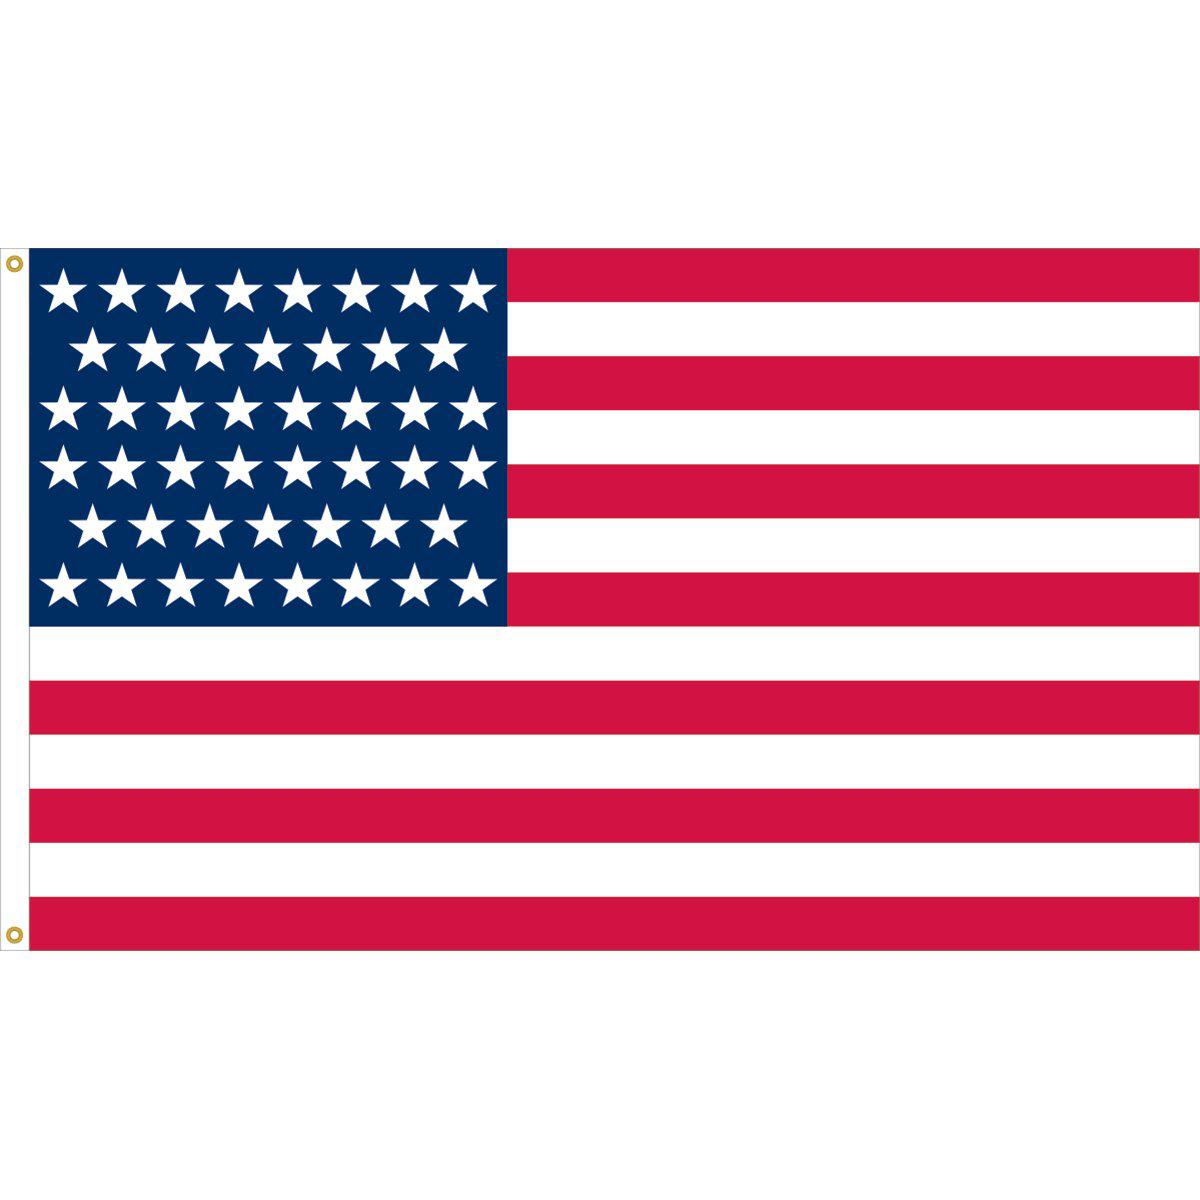 46 Stars American Flag